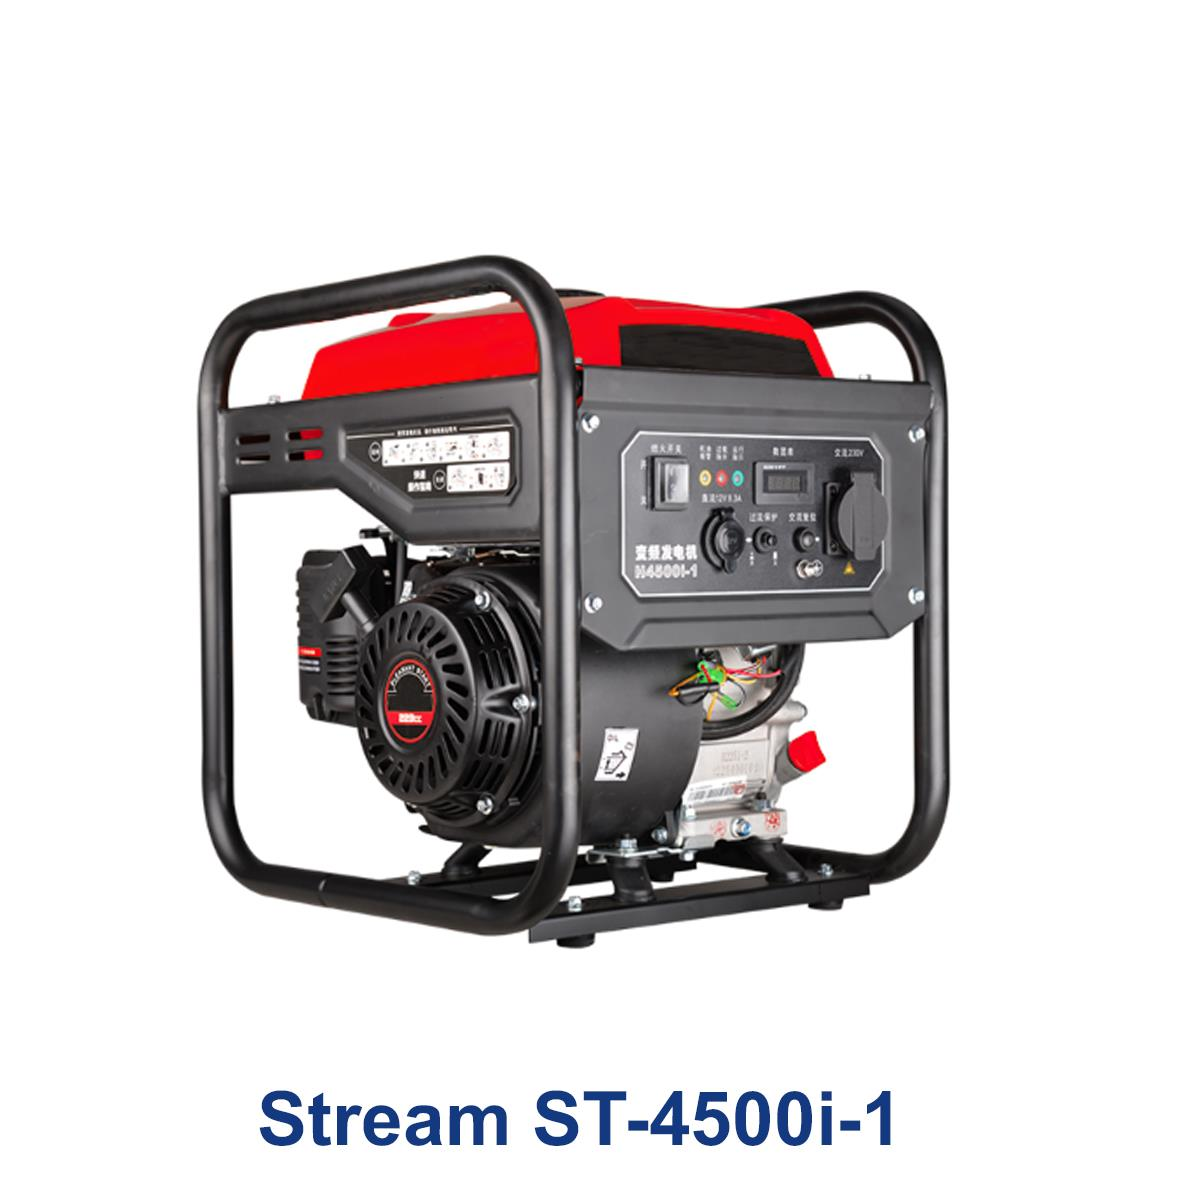 Stream-ST-4500i-1